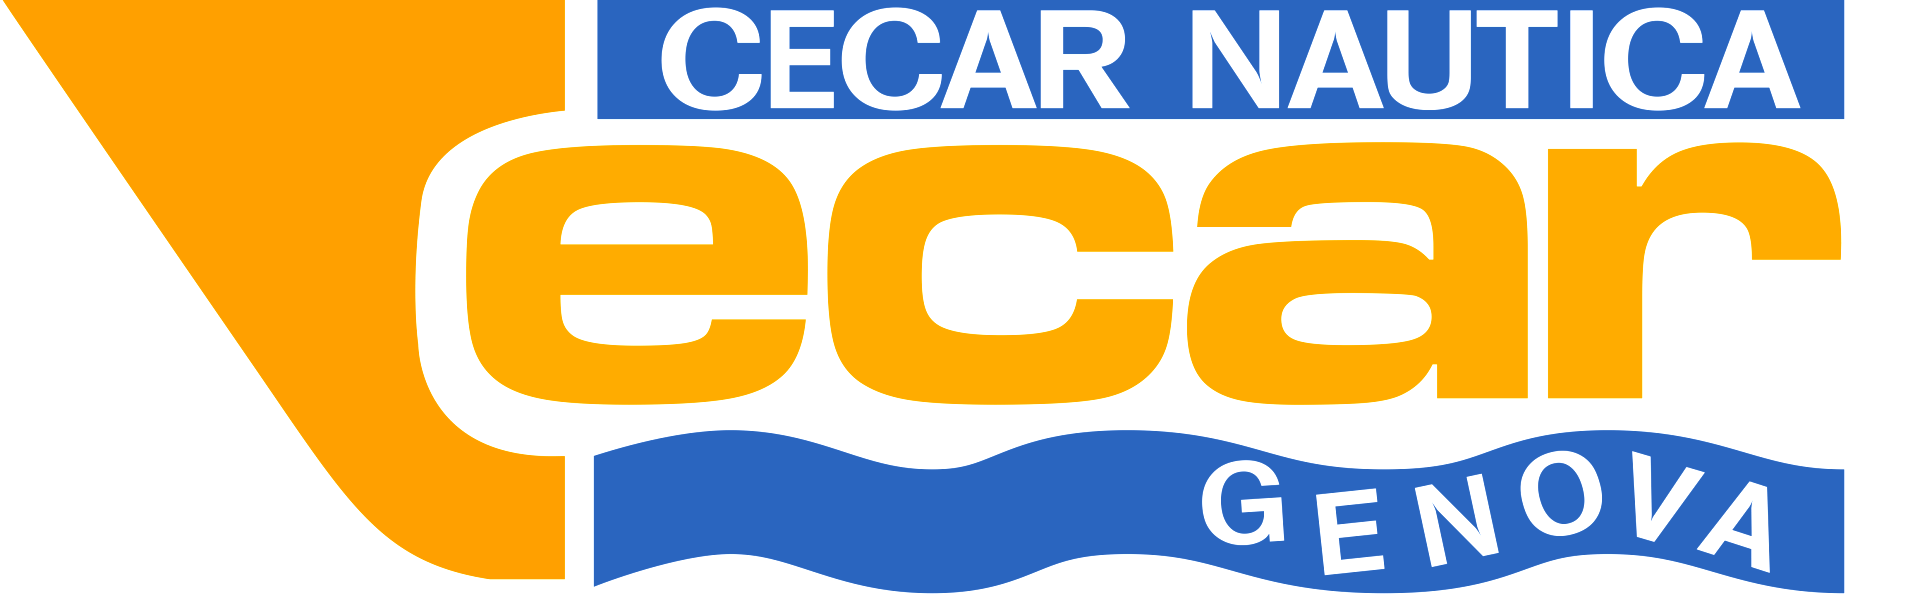 CECAR NAUTICA - LOGO